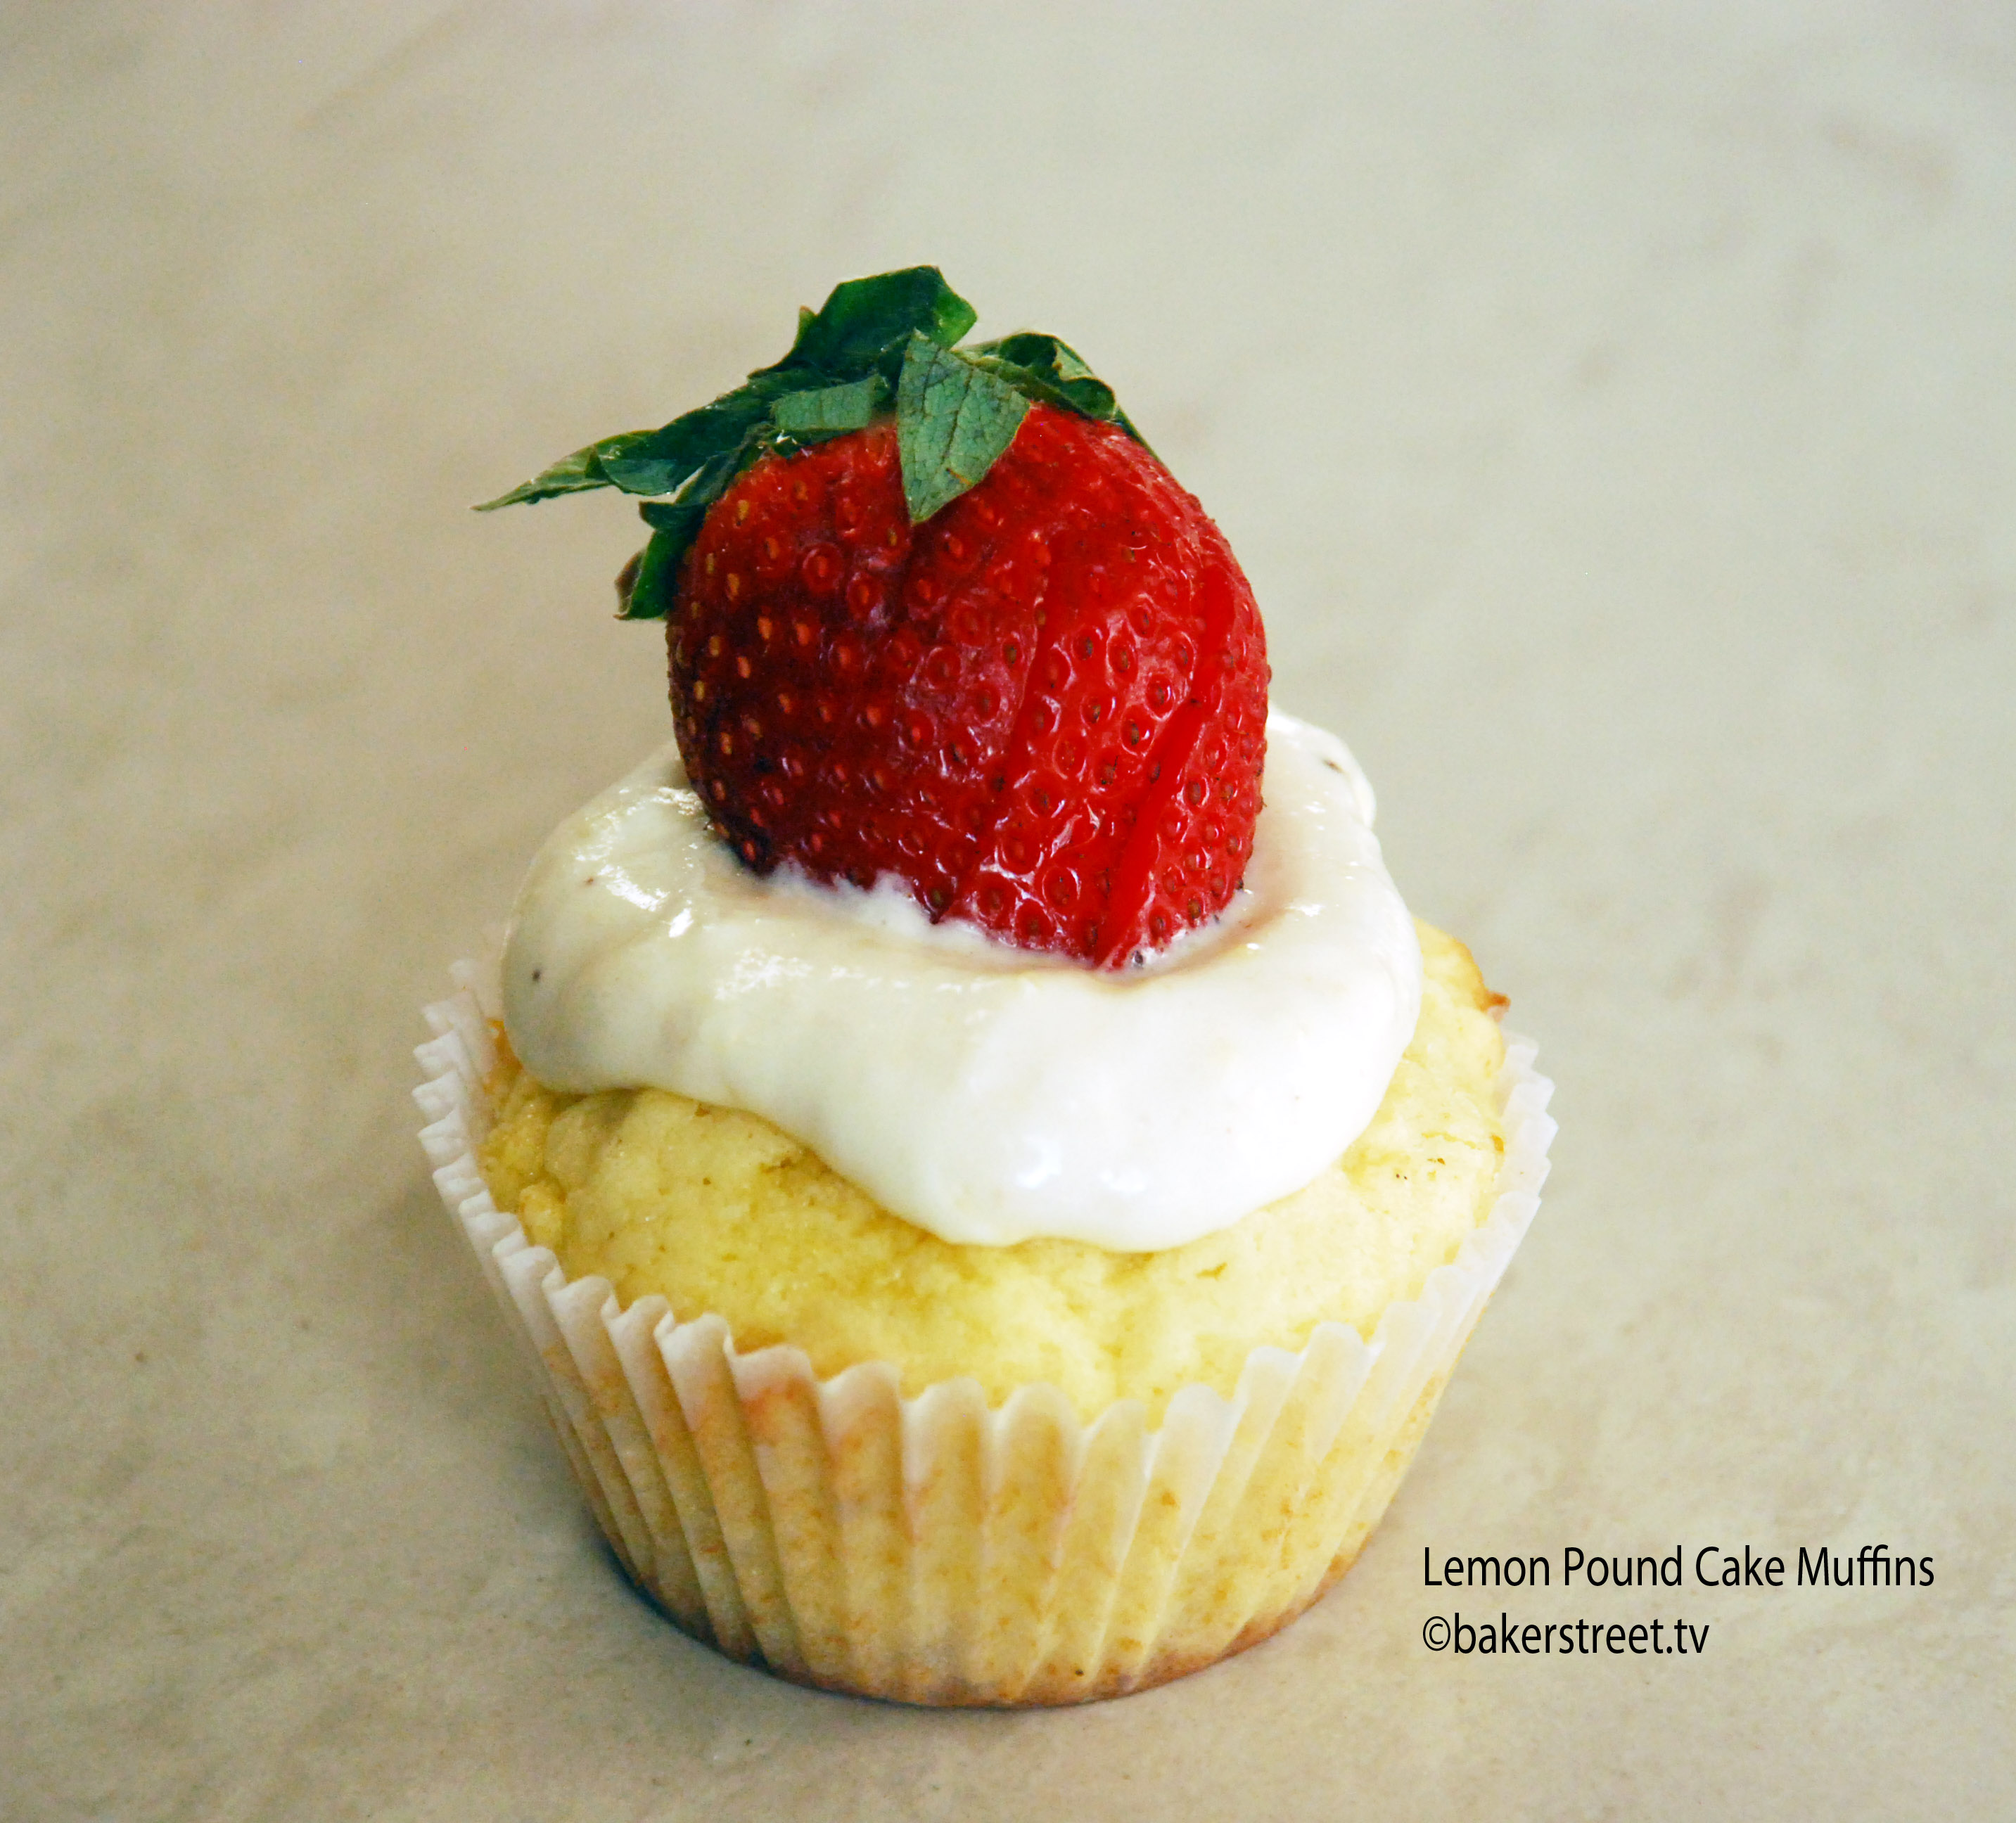 Lemon Pound Cake Muffins | Jan 30, 2012